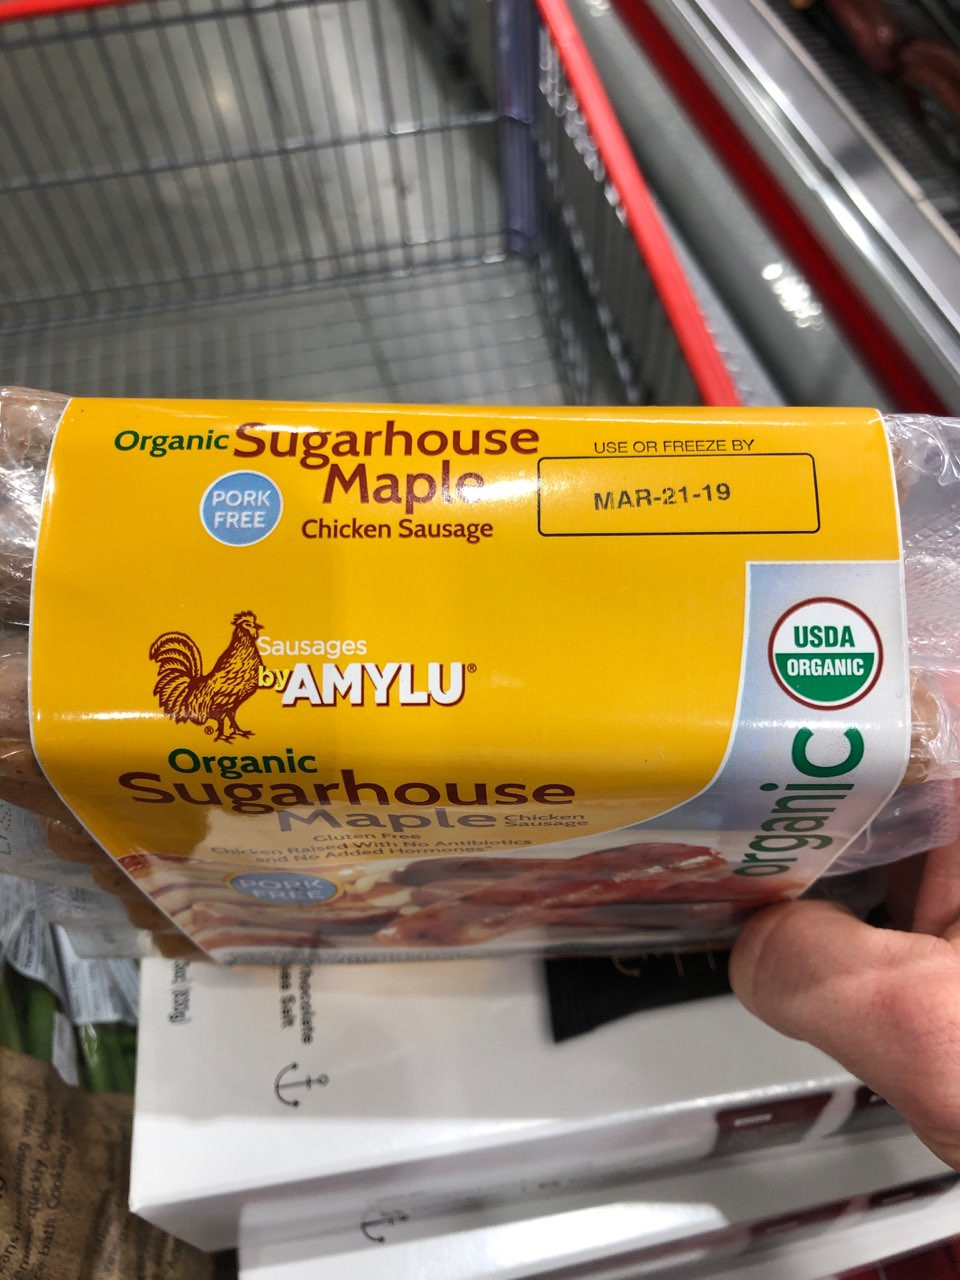 Chicken Sausage Nutrition
 Sausages by Amylu Organic Sugarhouse Maple Chicken